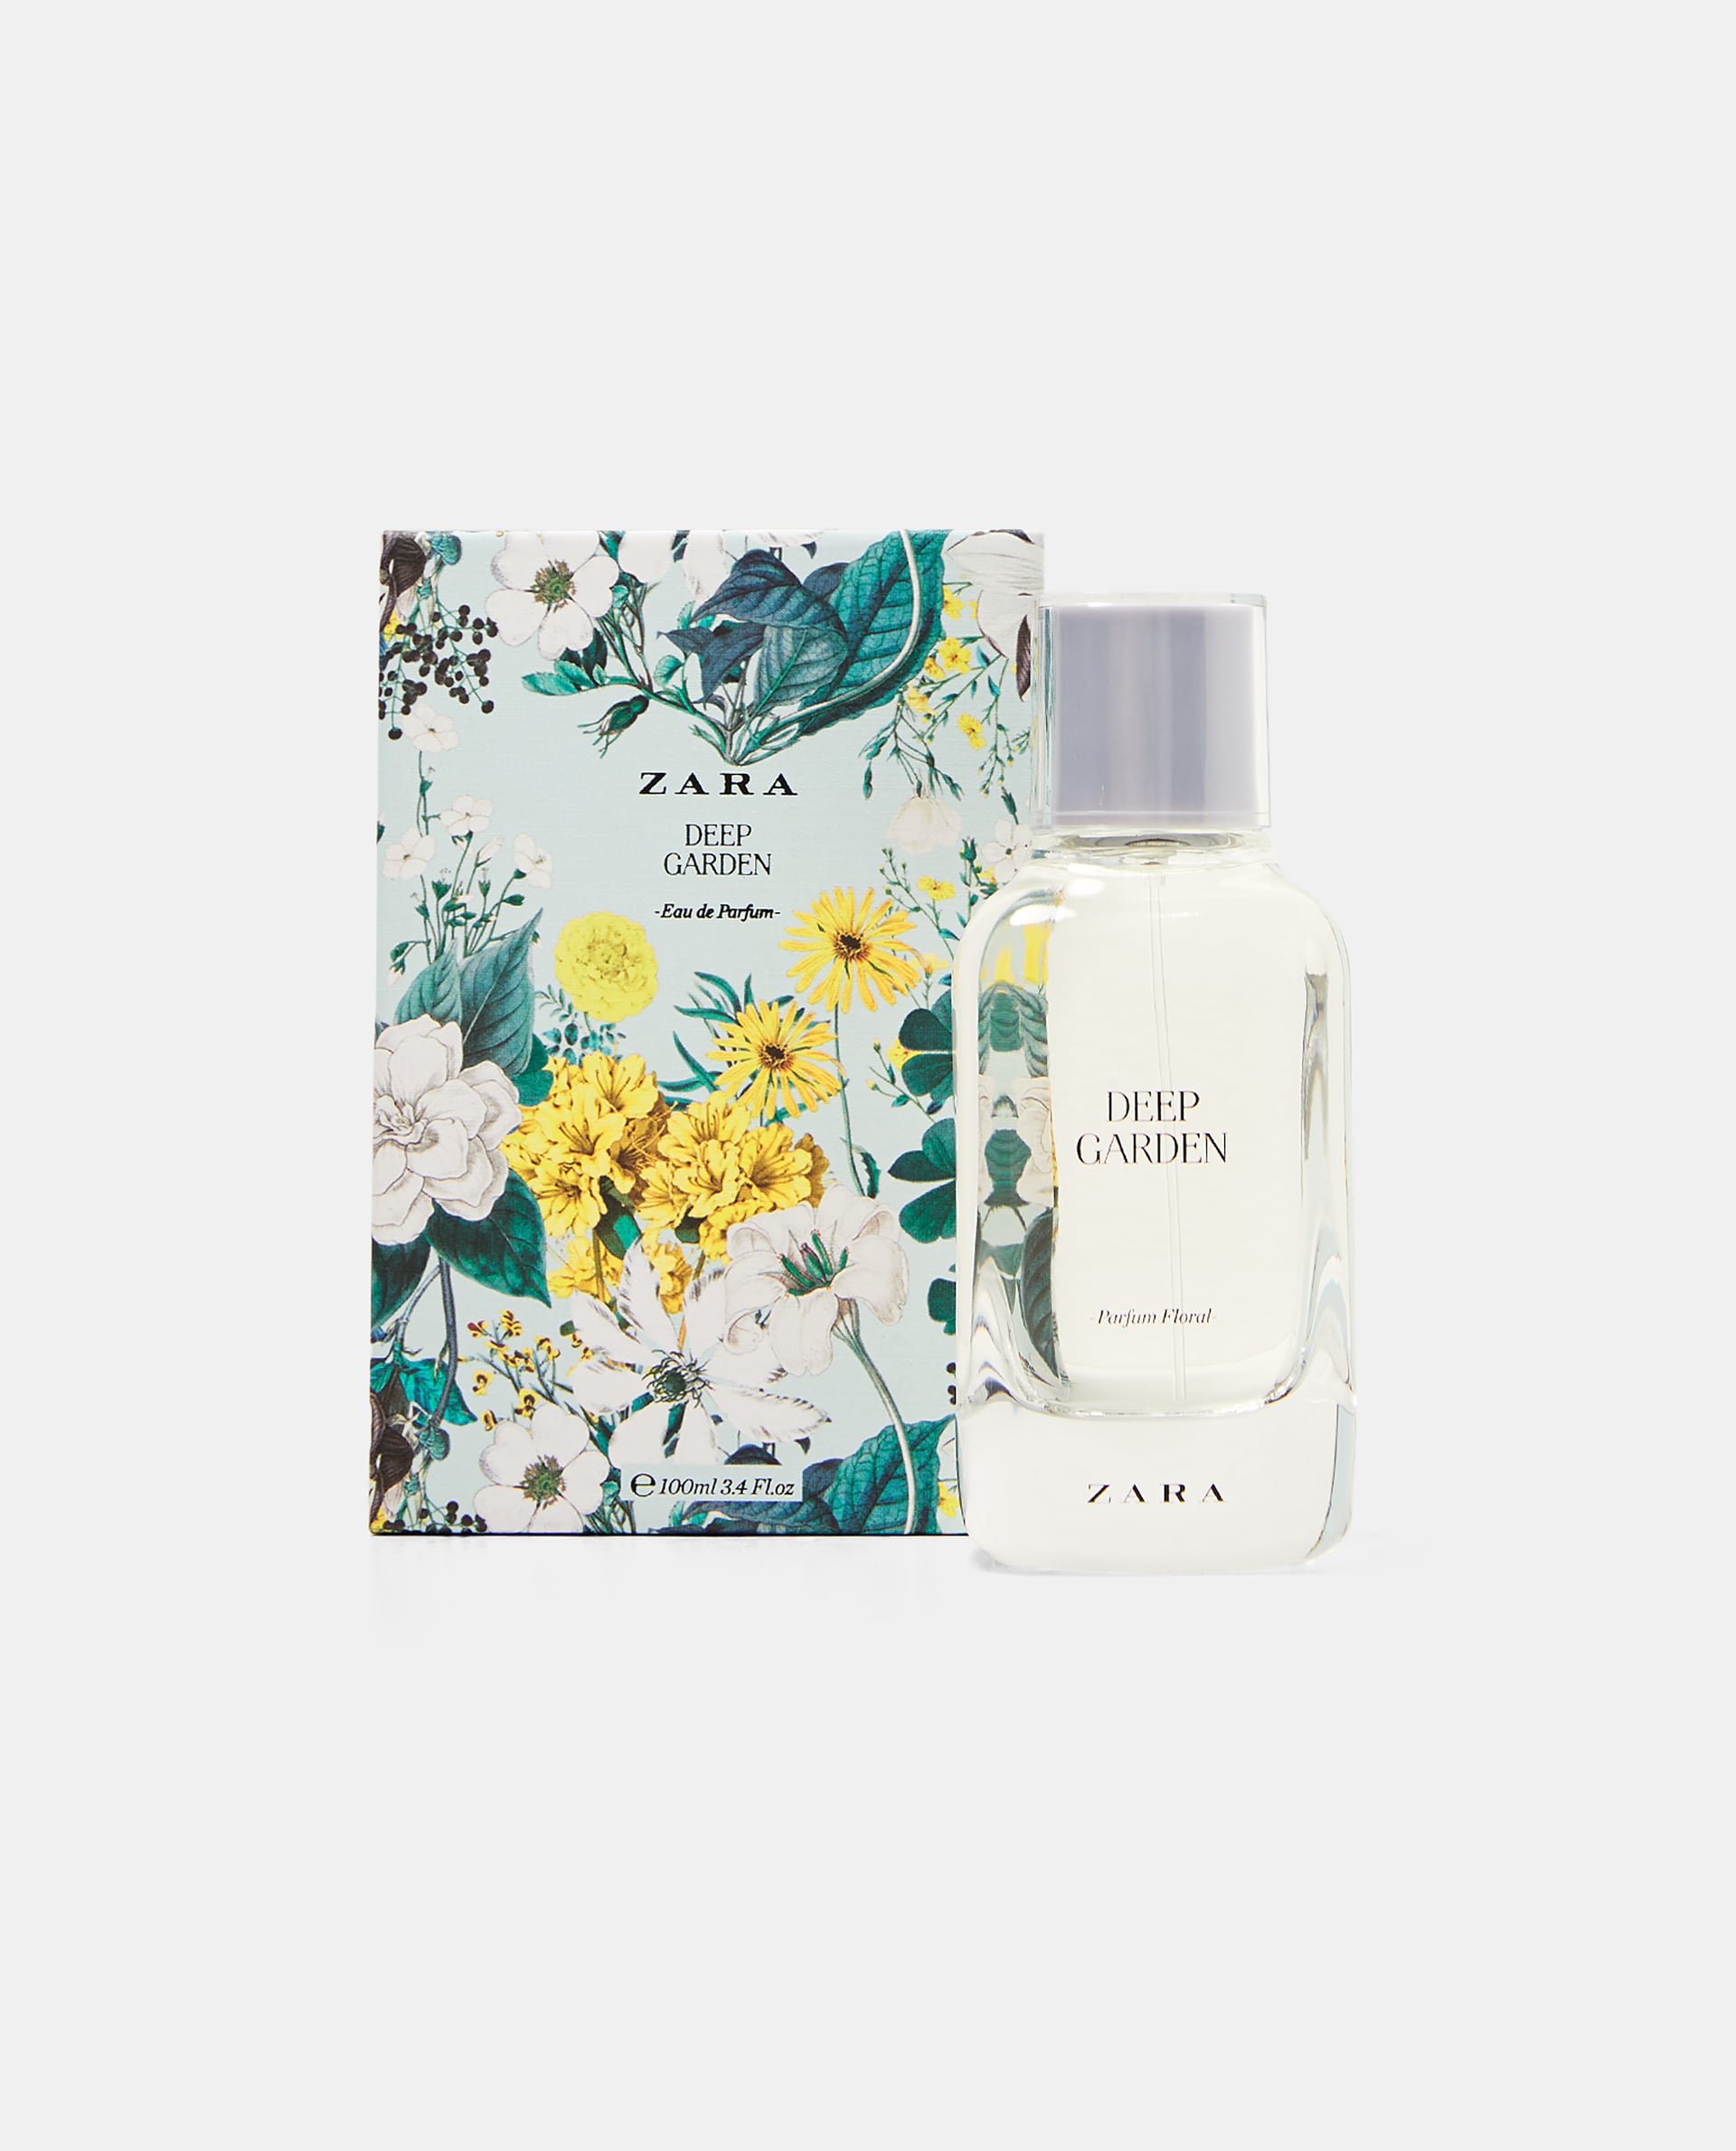 lightly bloom zara perfume